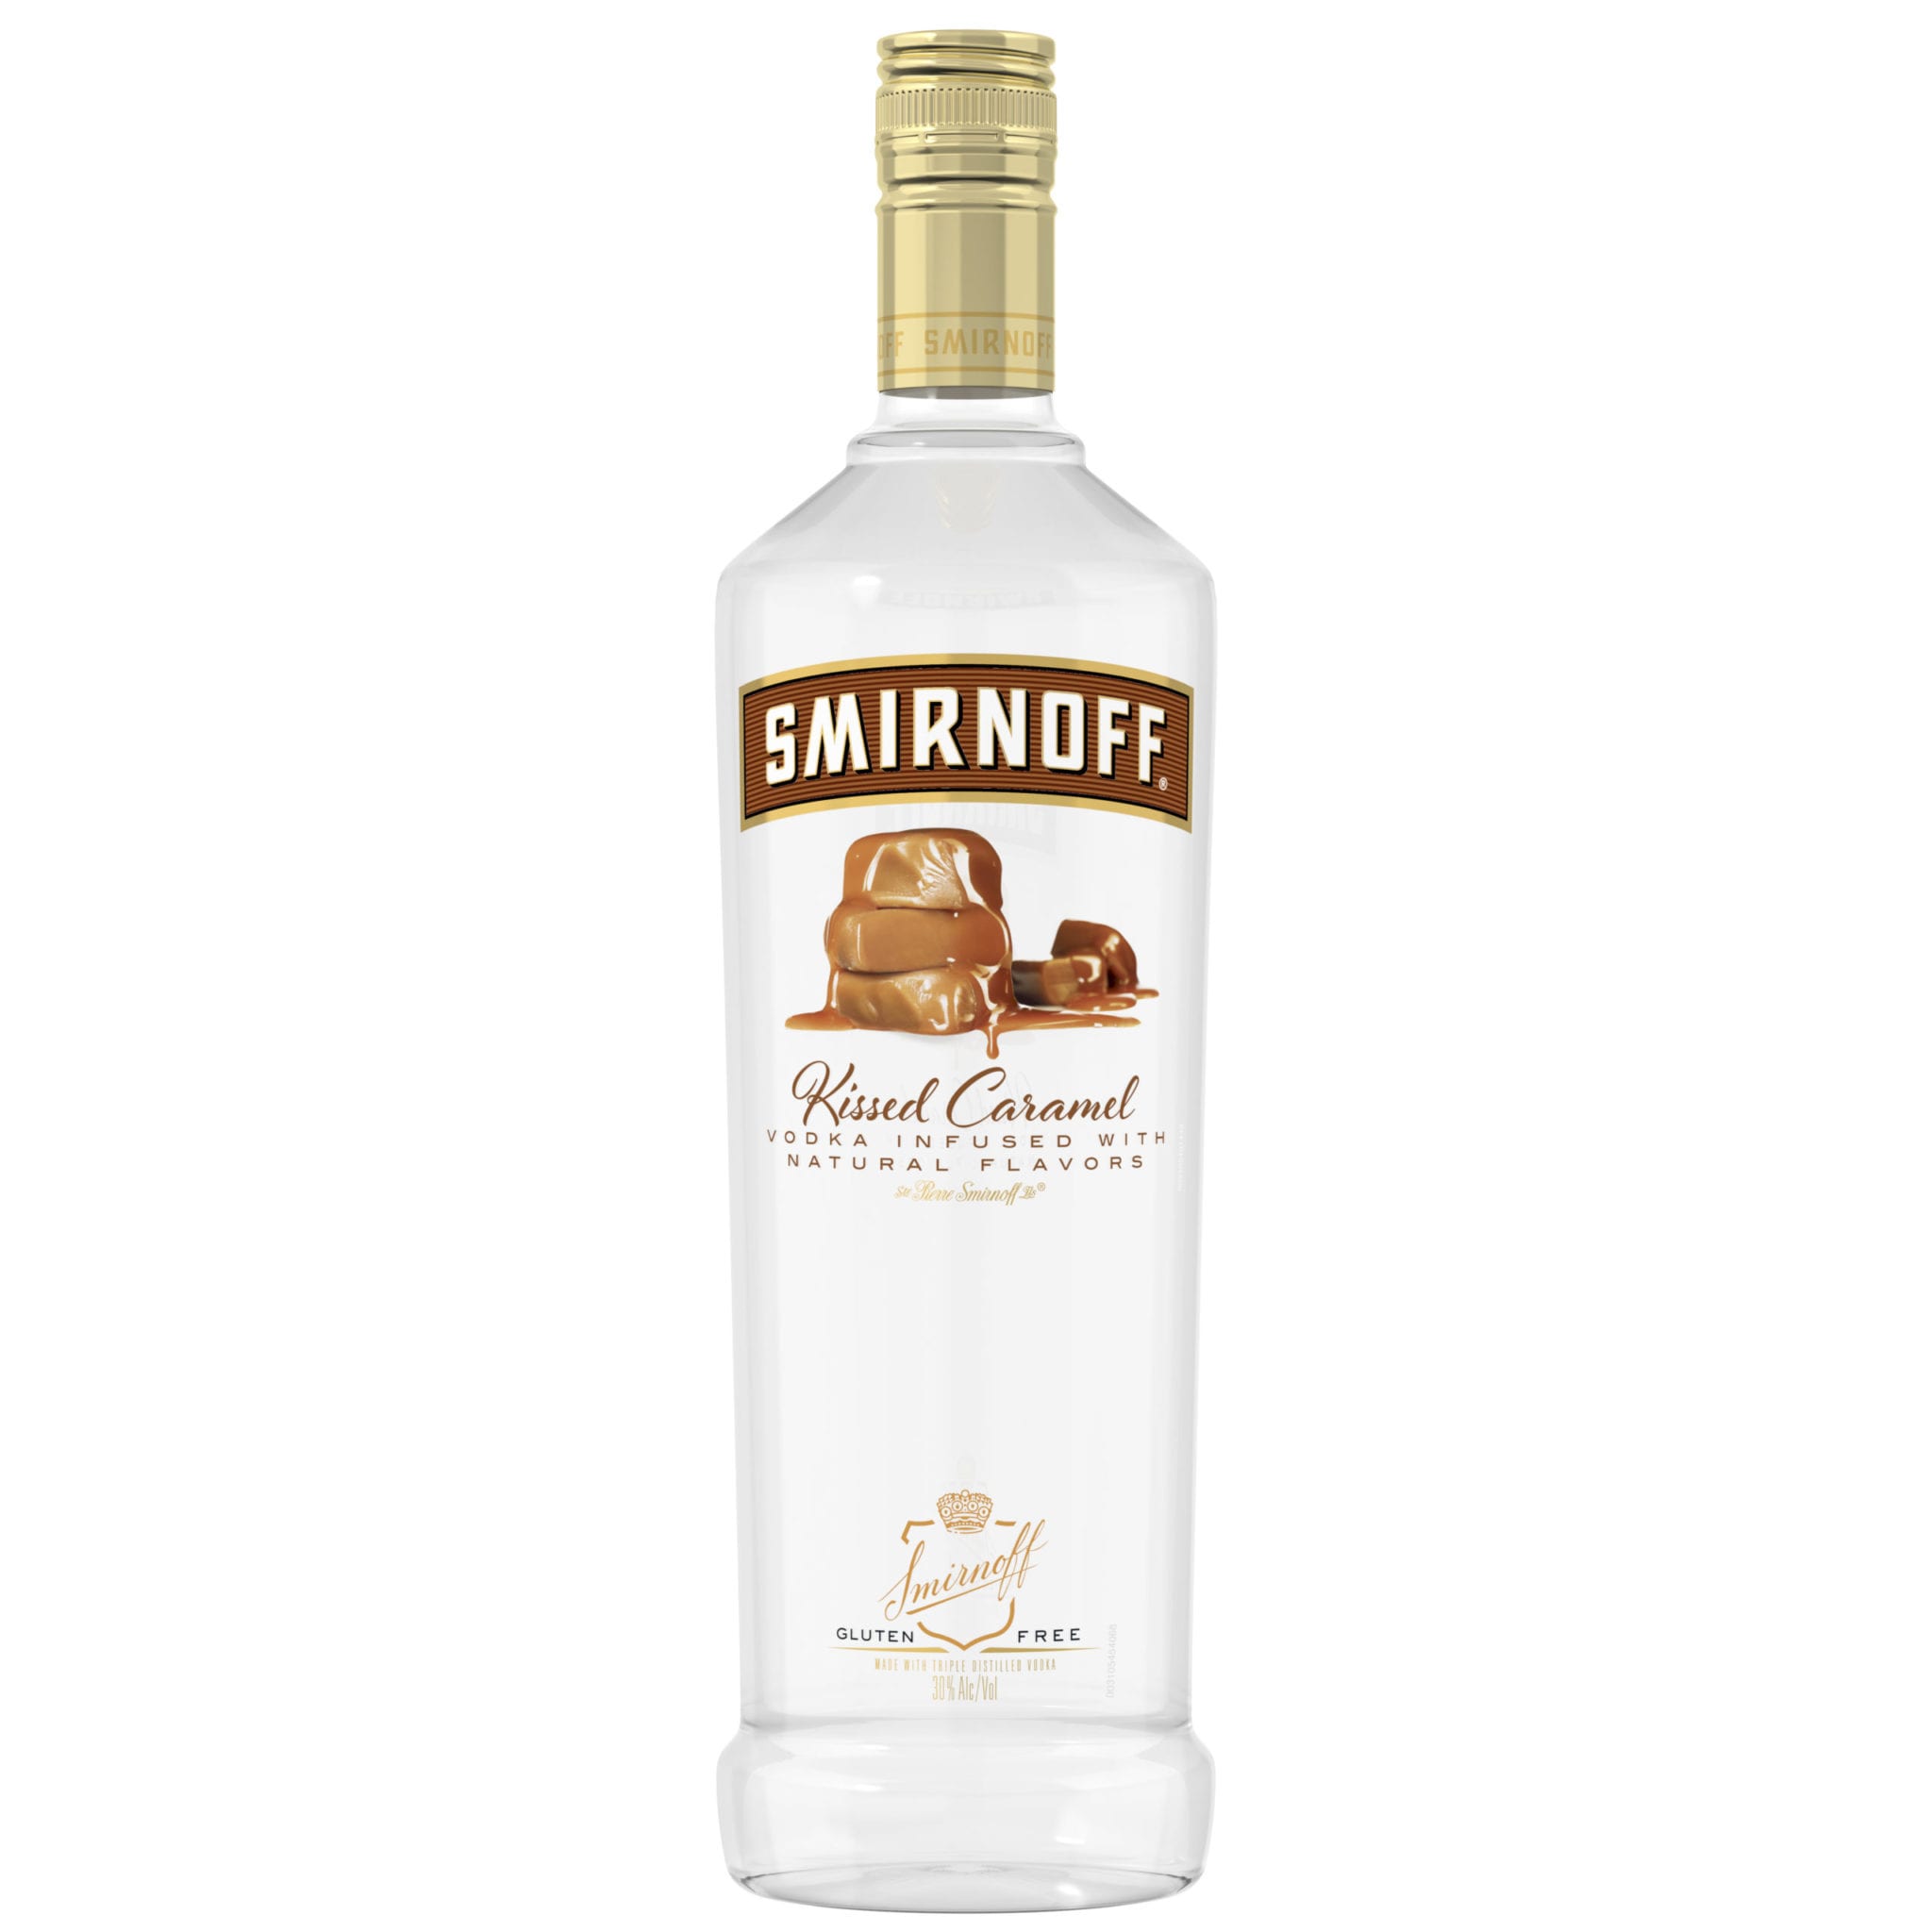 Smirnoff Kissed Caramel Vodka